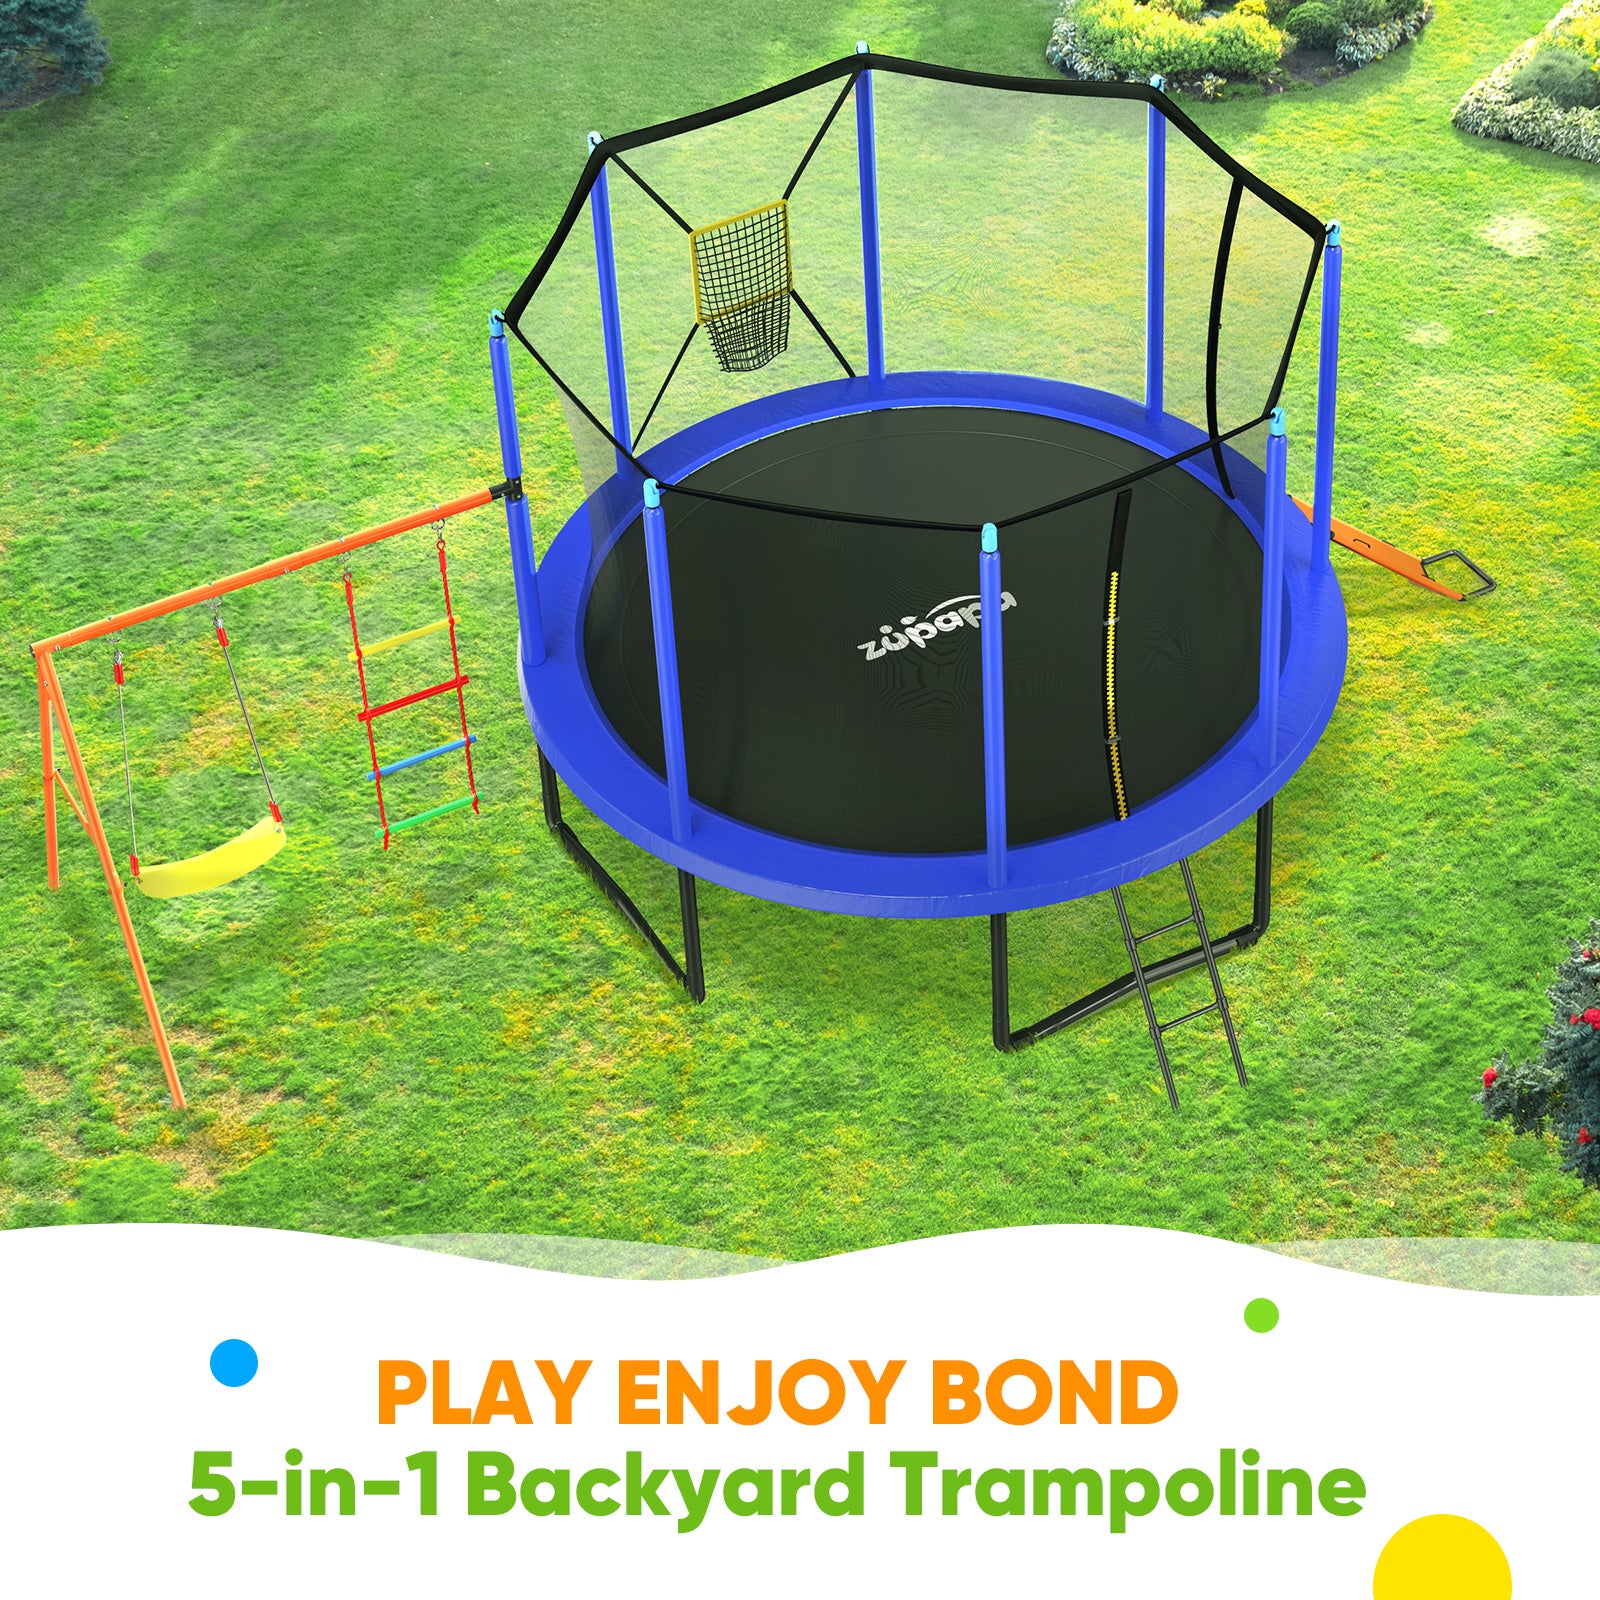 2024 Ultimate 5-in-1 Backyard 12FT Trampoline Adventure Park